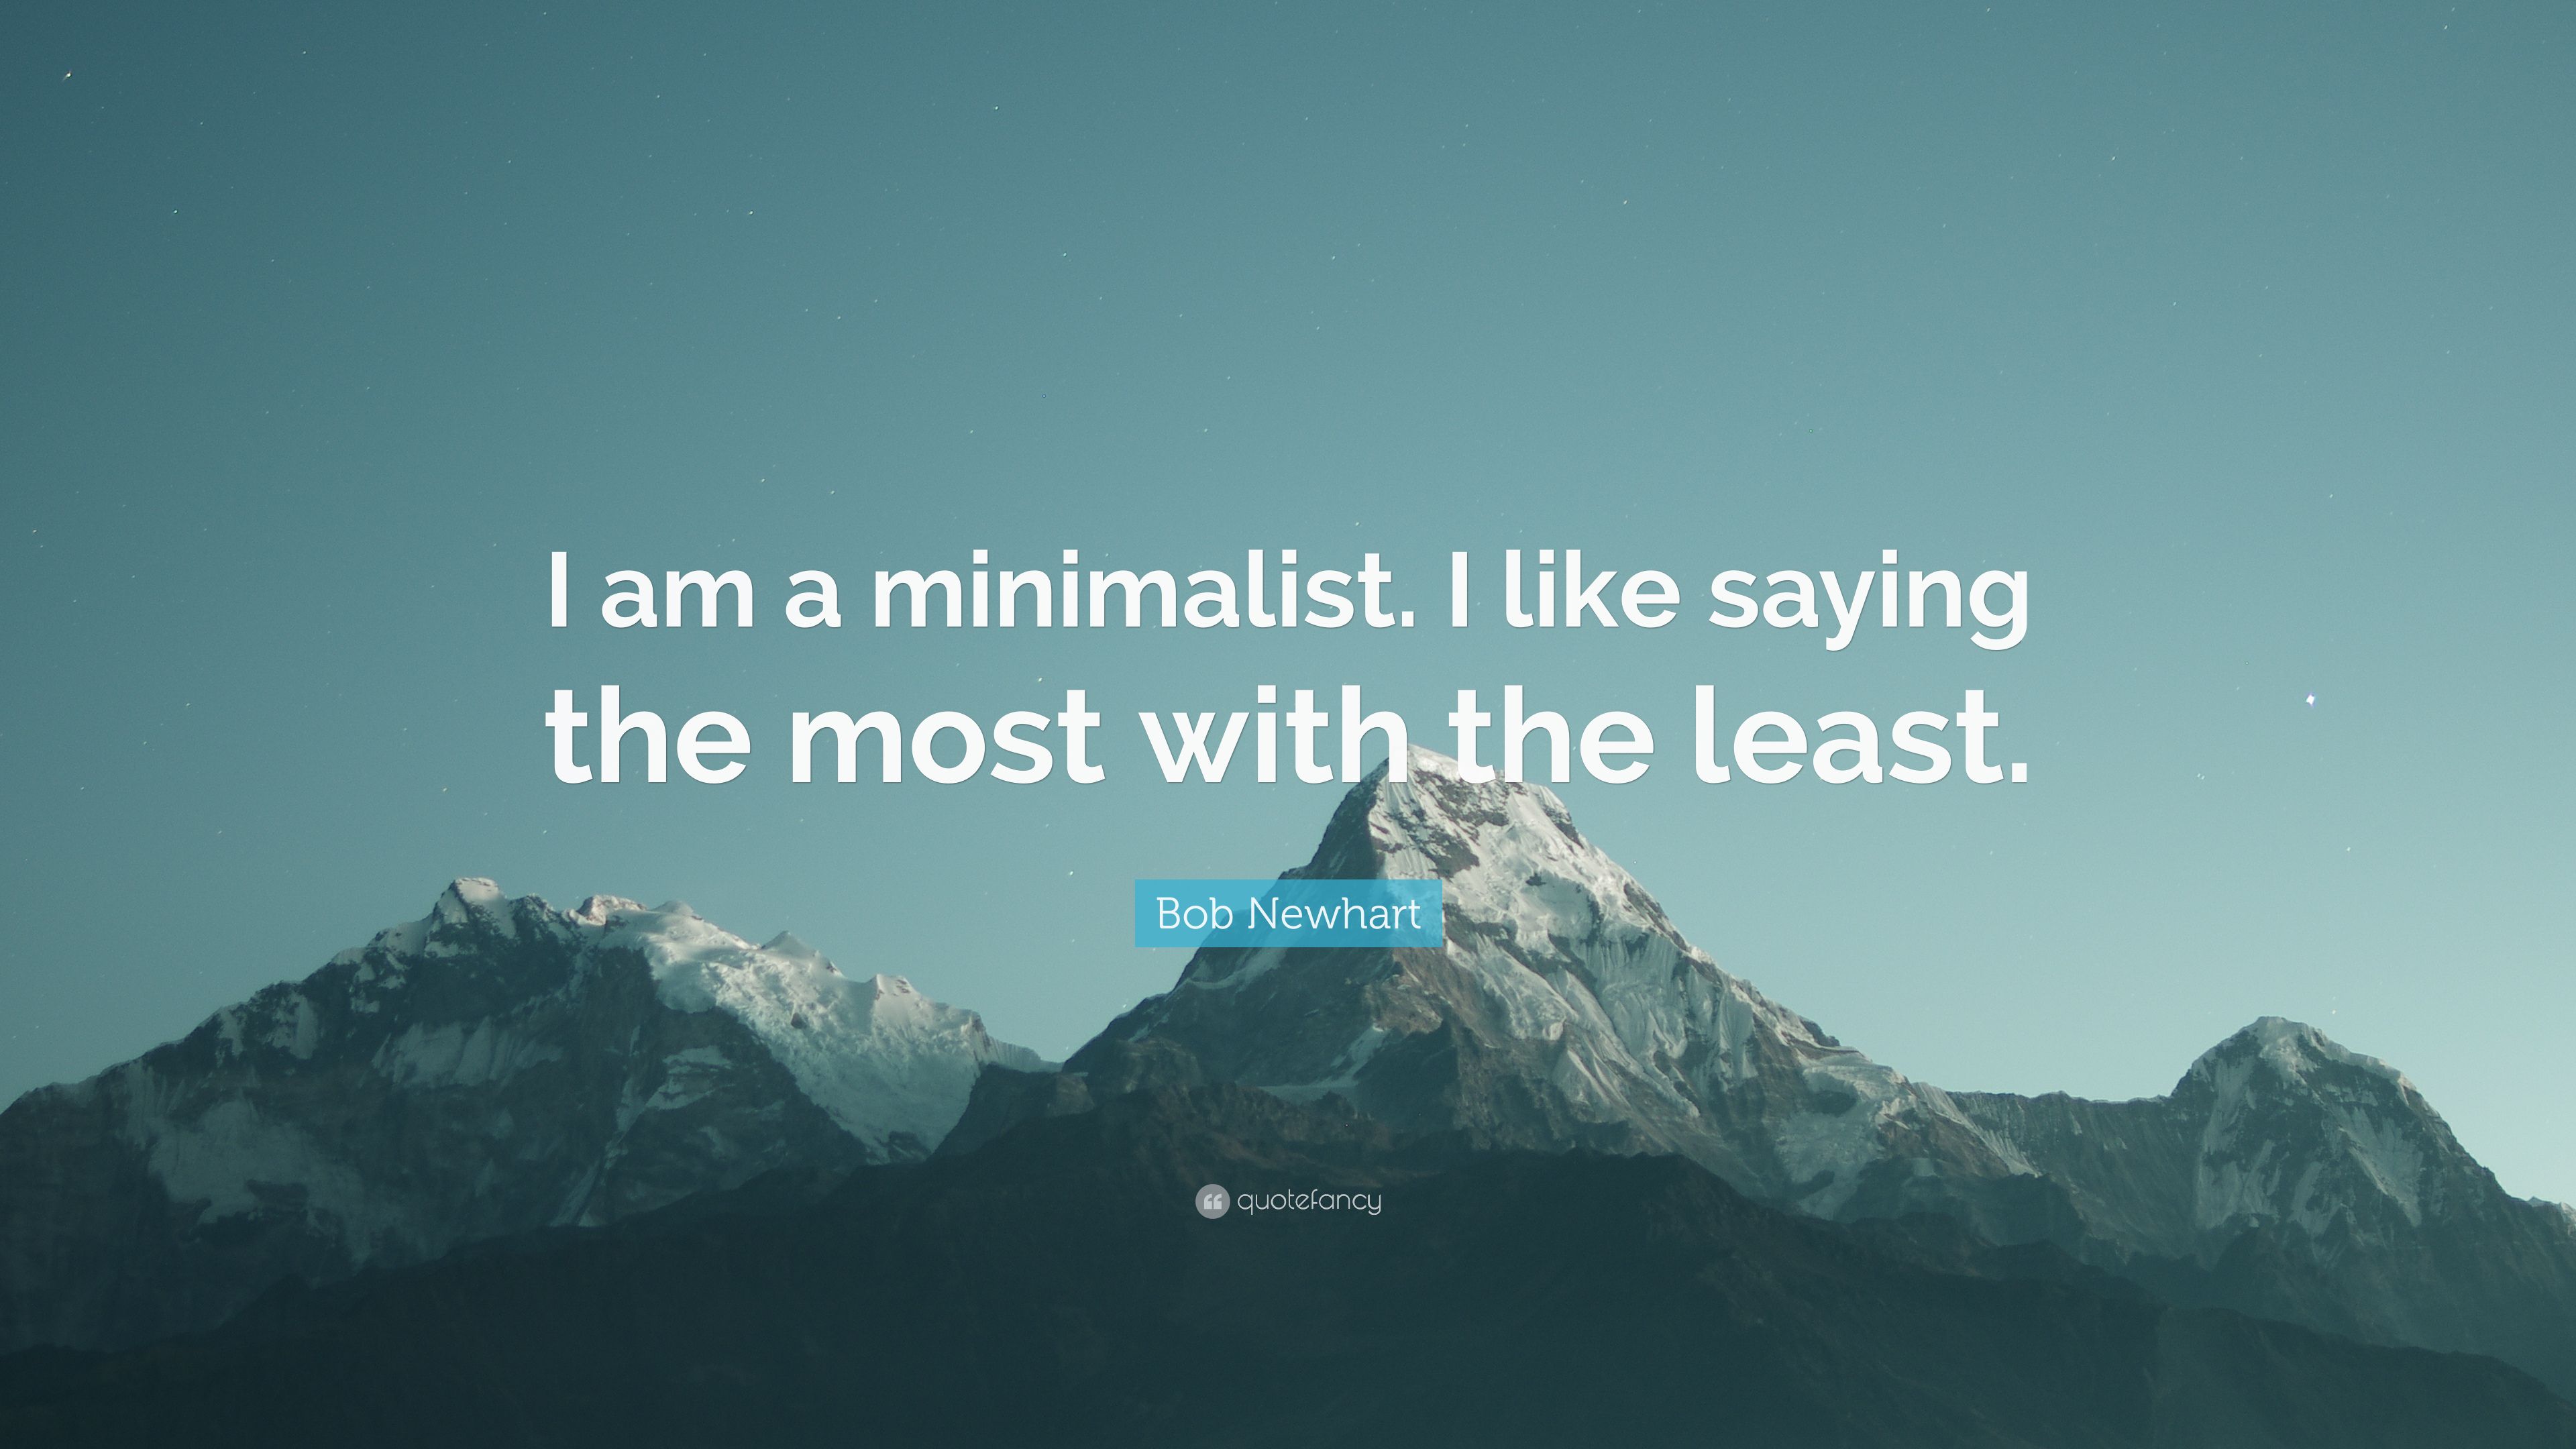 Bob Newhart Quote: “I am a minimalist. I like saying the most